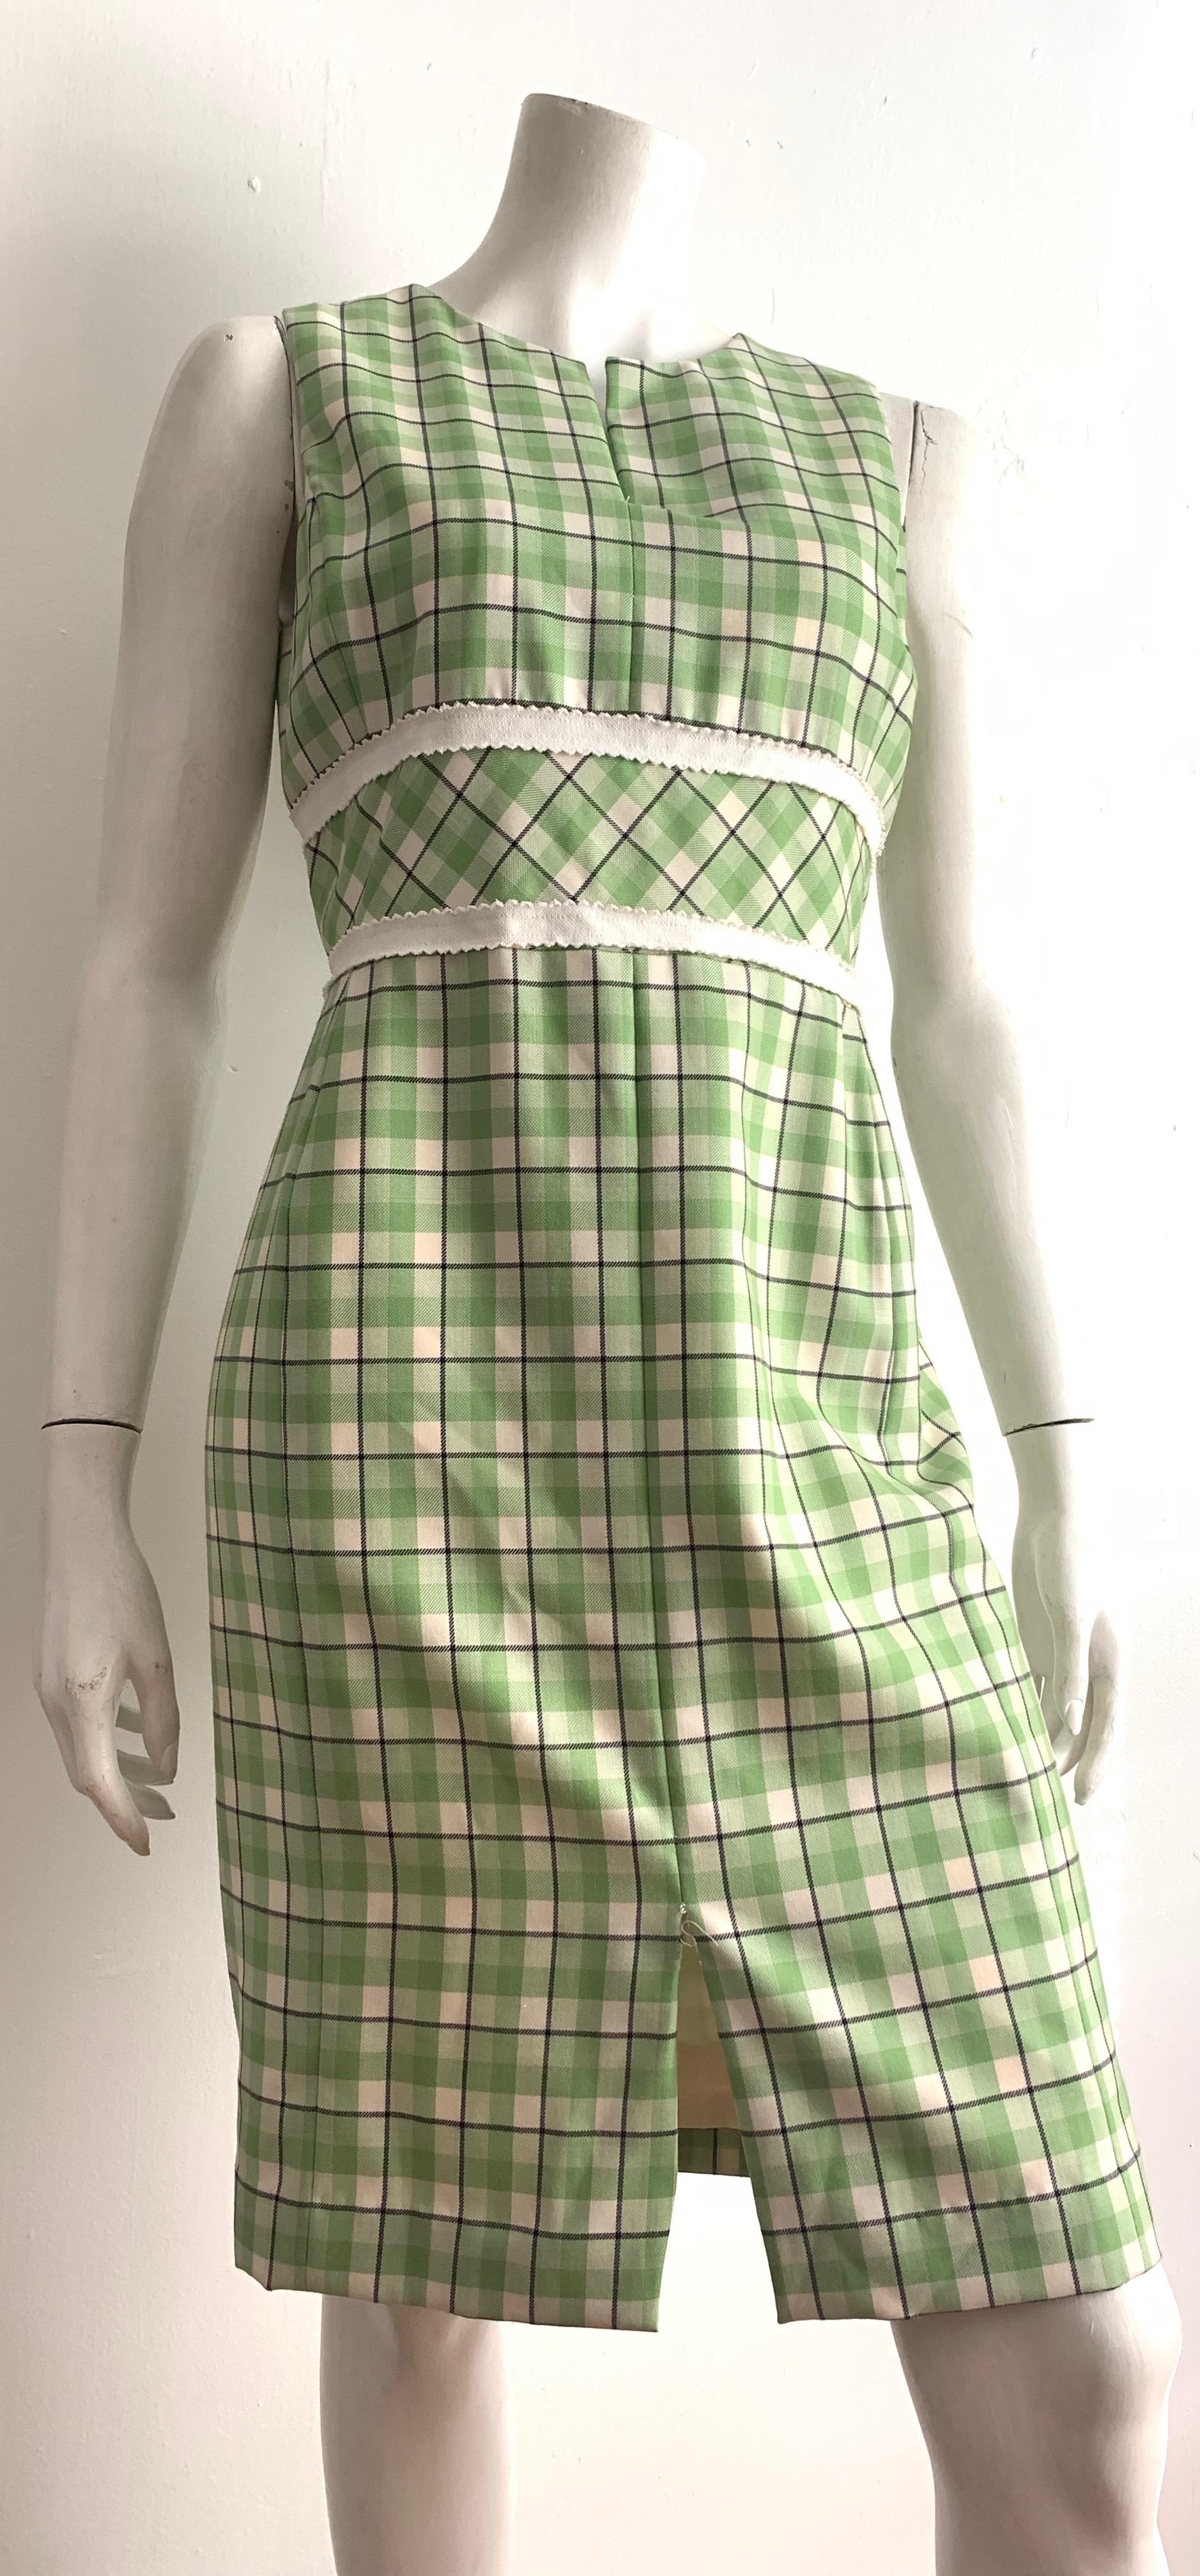 Beige Oscar de la Renta Plaid Sleeveless Dress Size 6. For Sale